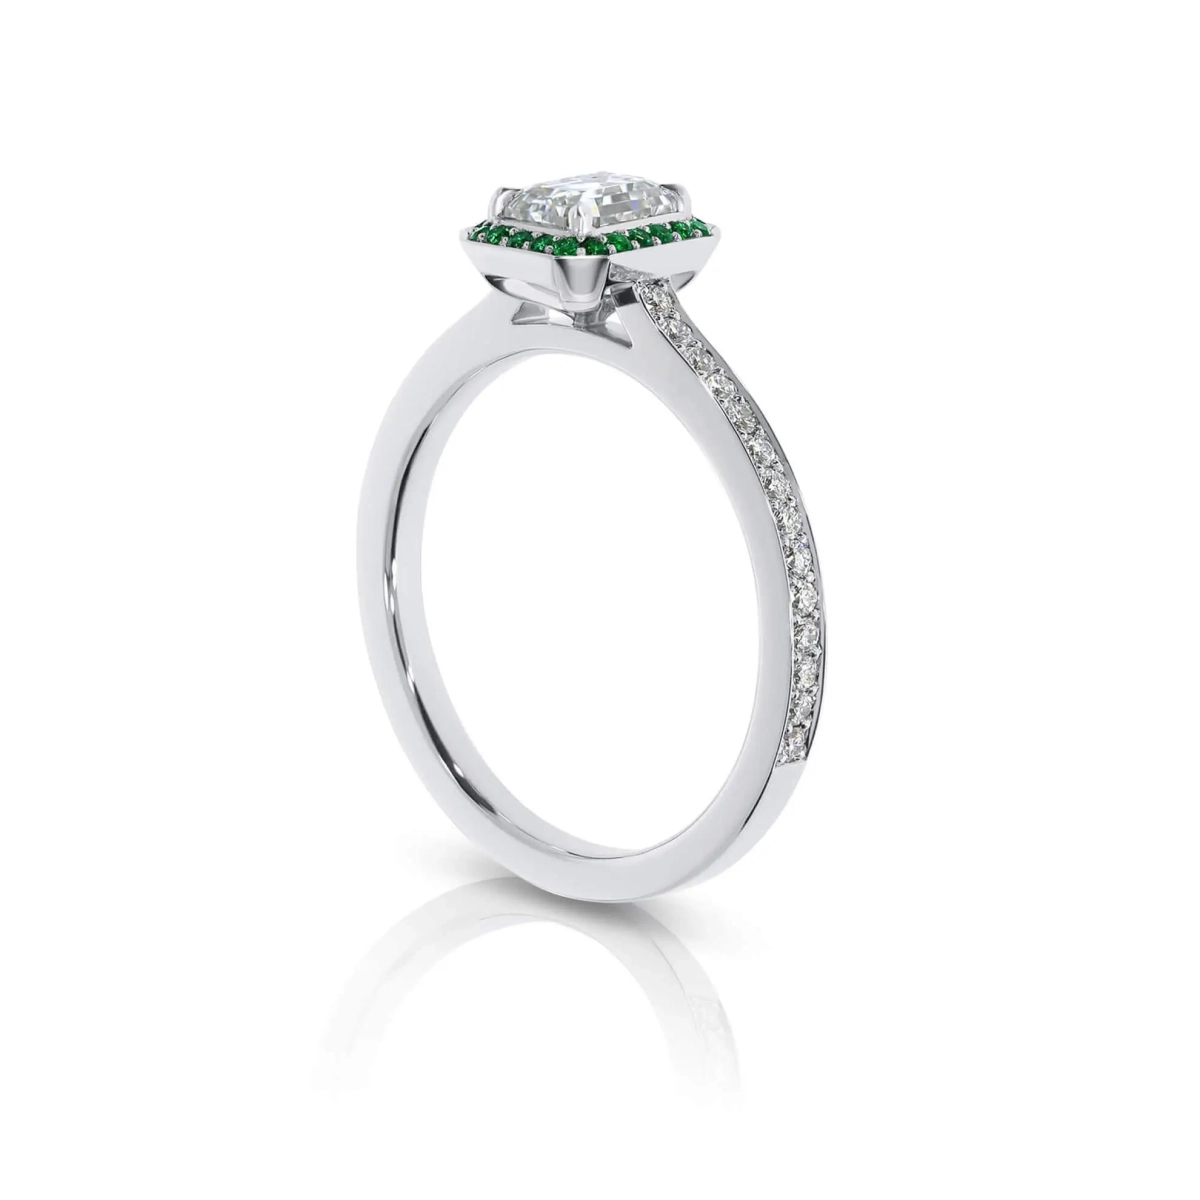 Pavé Set Emerald Cut Diamond Halo Engagement Ring